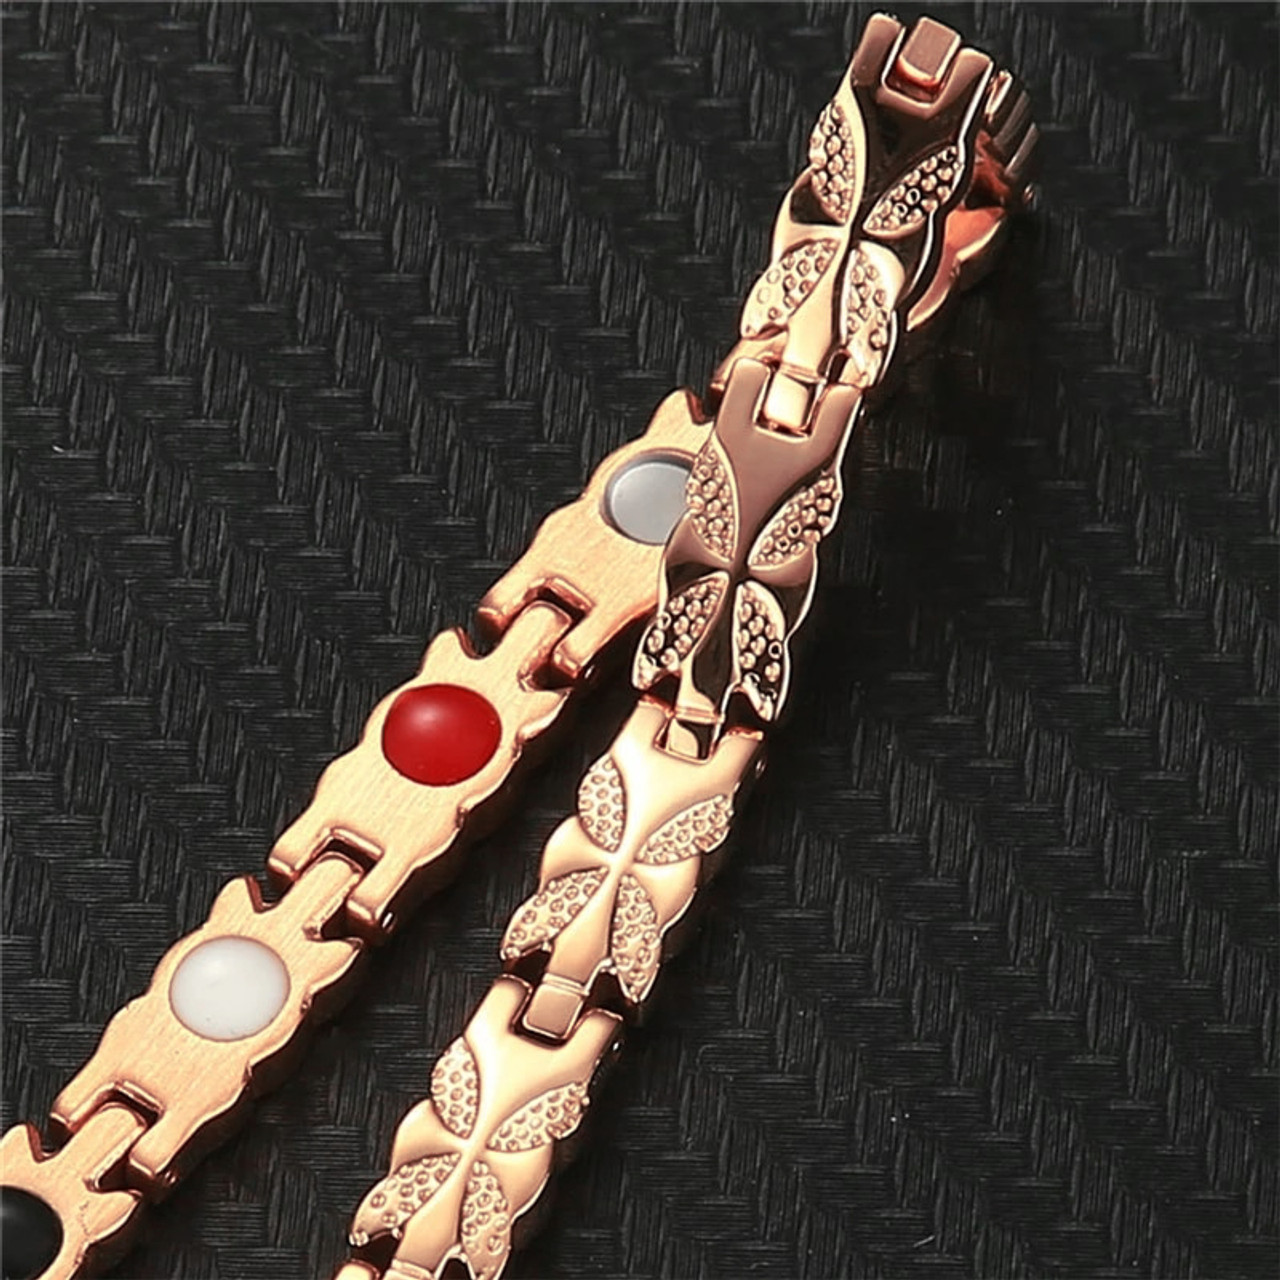 8" Inch Length - Women's All Rose Gold Stainless Steel Magnetic Bracelet (Magnets, far infrared, germanium, negative Ion bracelet)